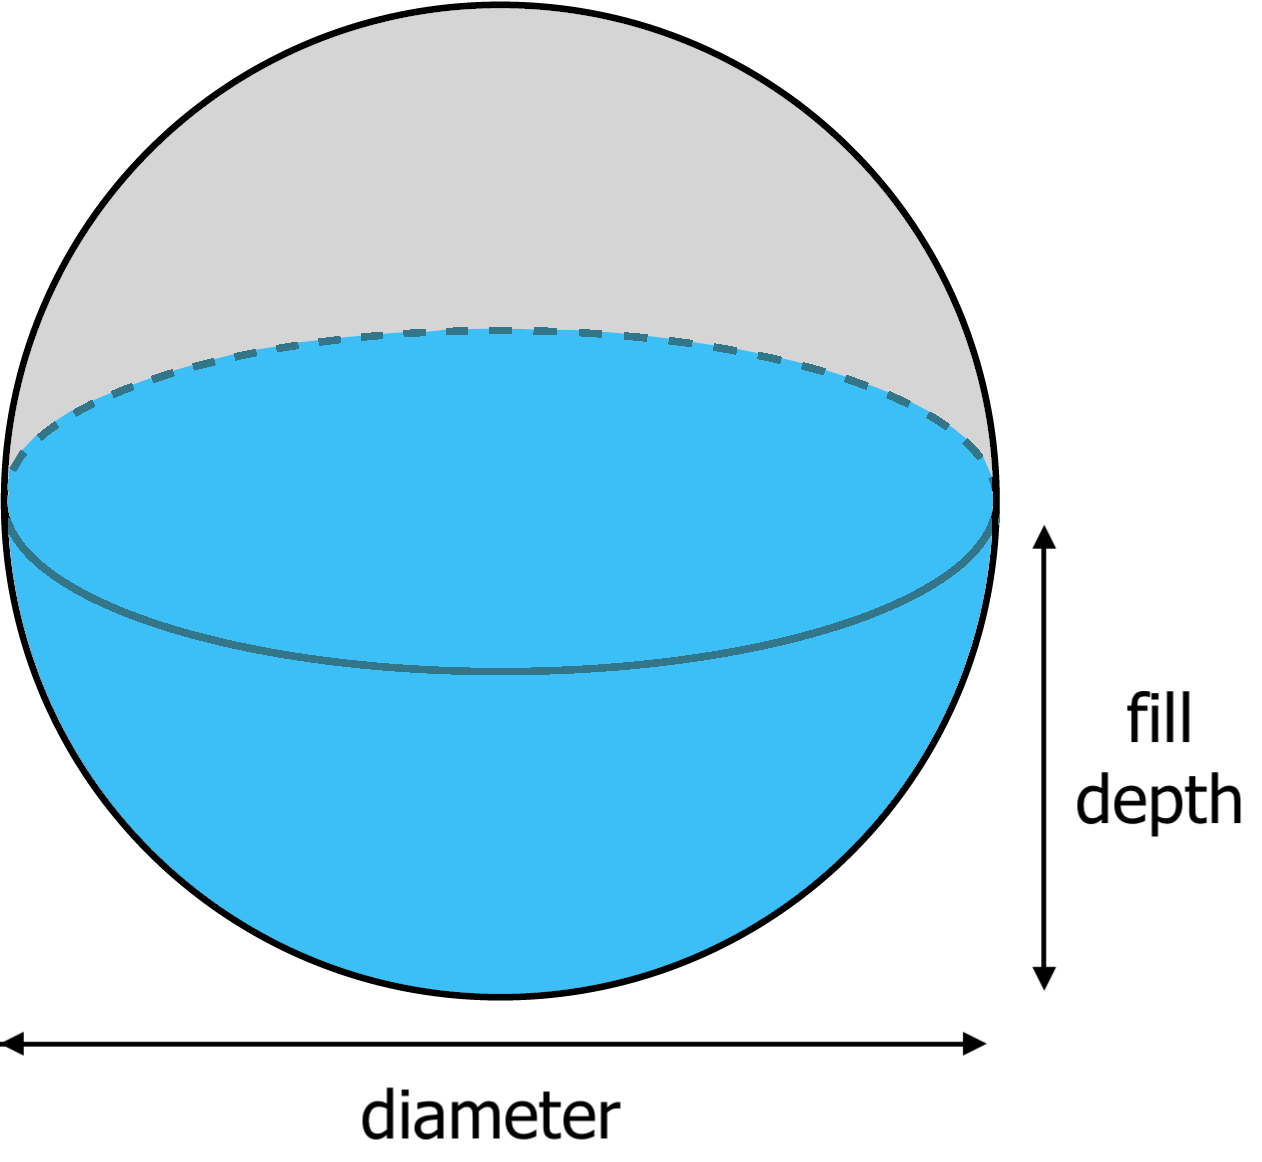 sphere tank diagram showing diameter and fill depth dimensions